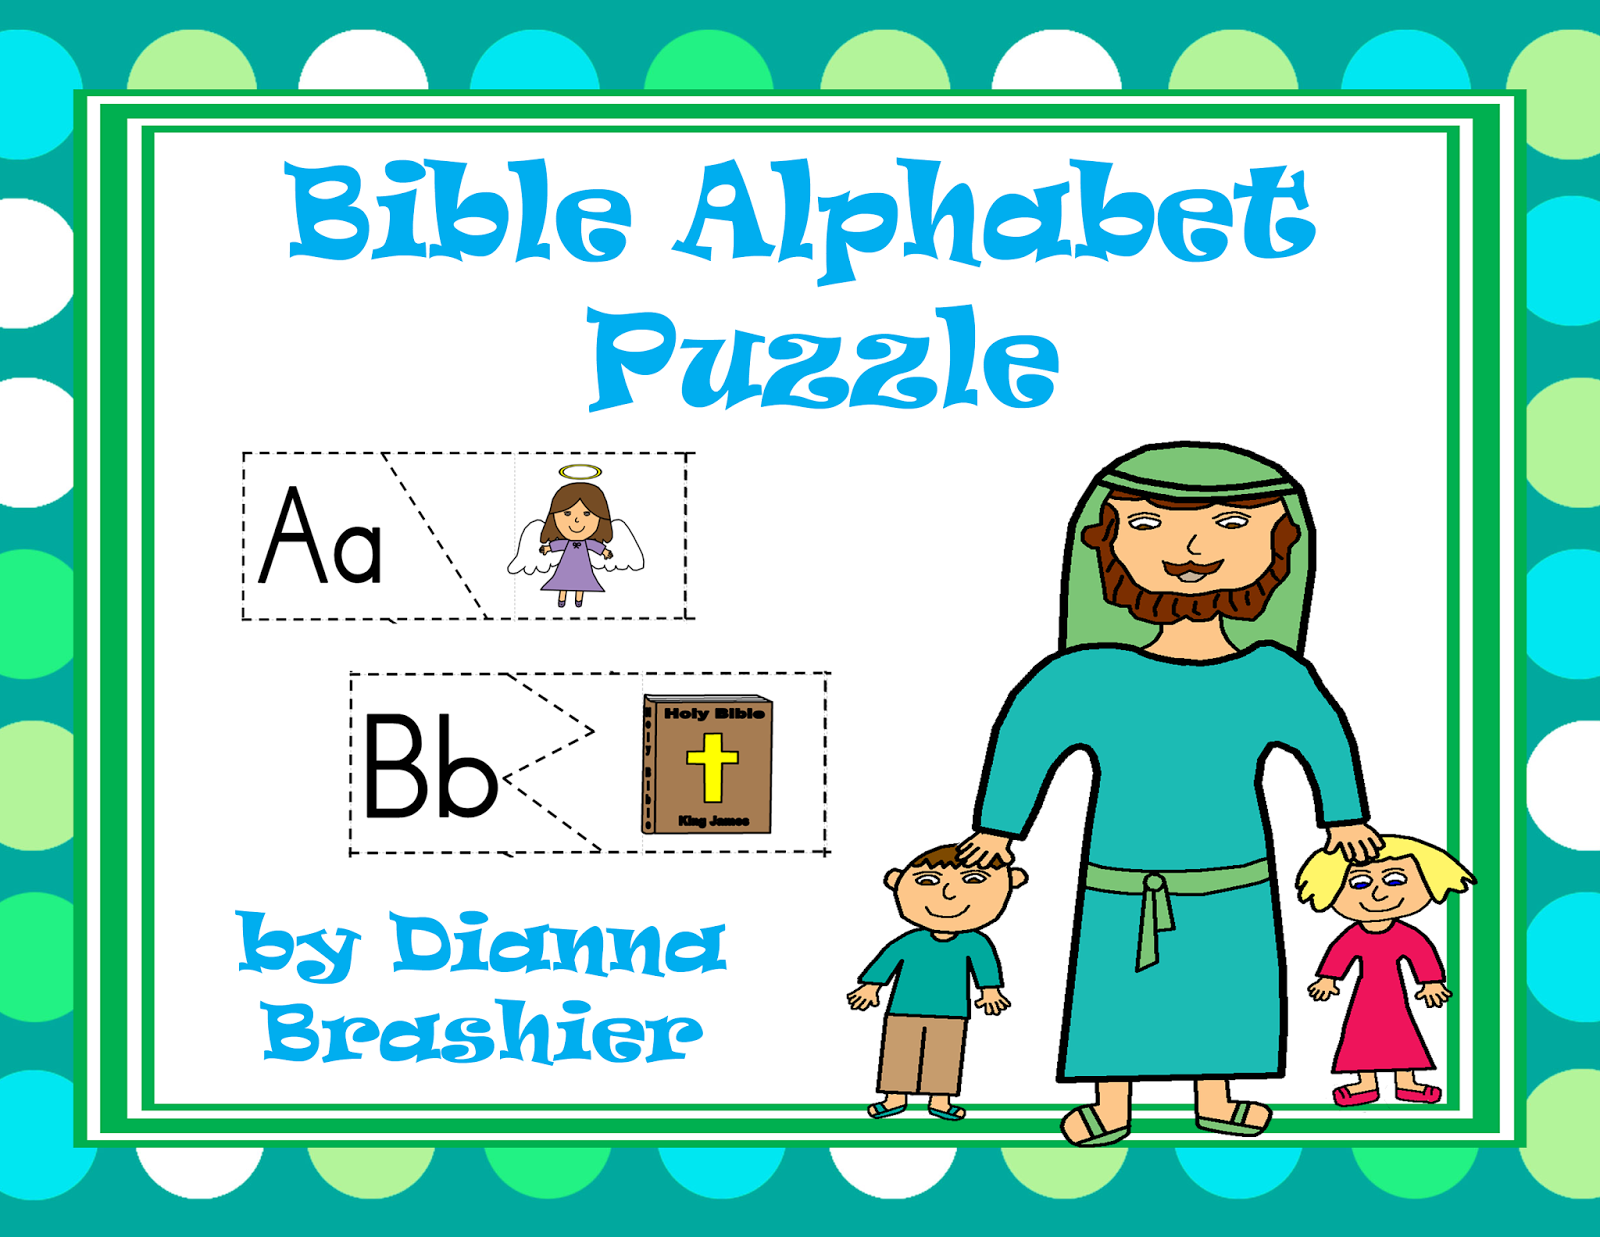 https://www.teacherspayteachers.com/Product/Alphabet-Puzzle-with-a-Christian-Theme-1762055